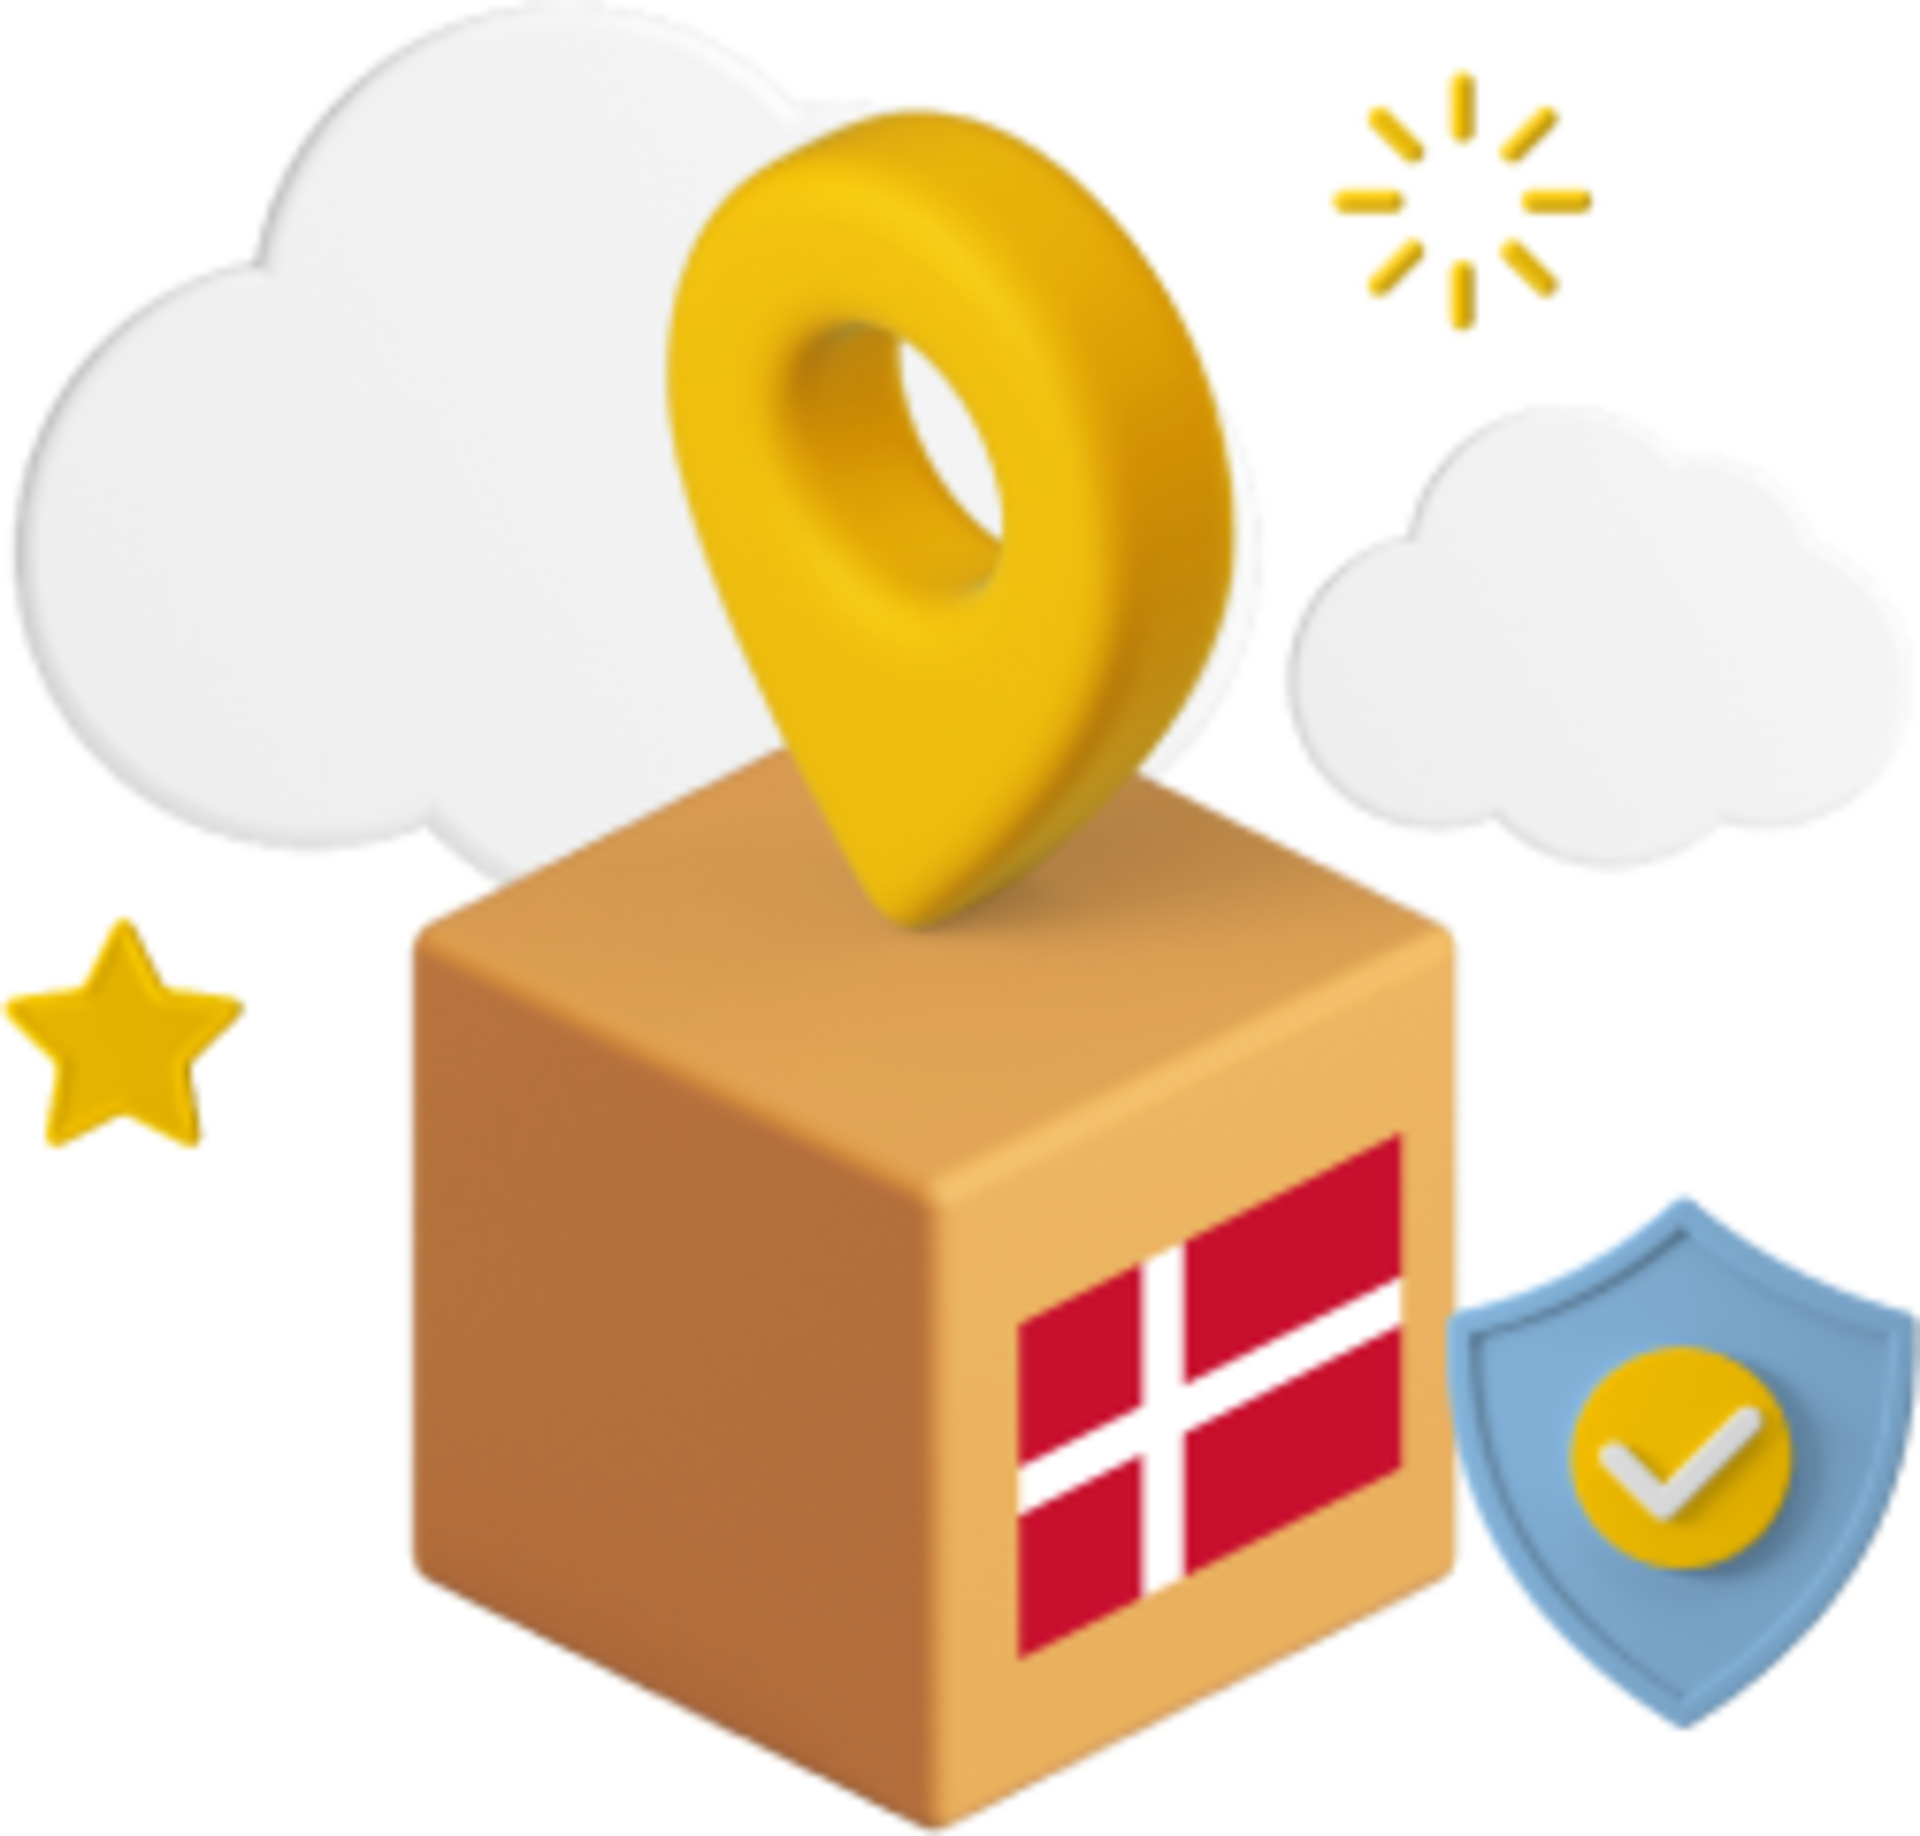 Box with Danish flag on